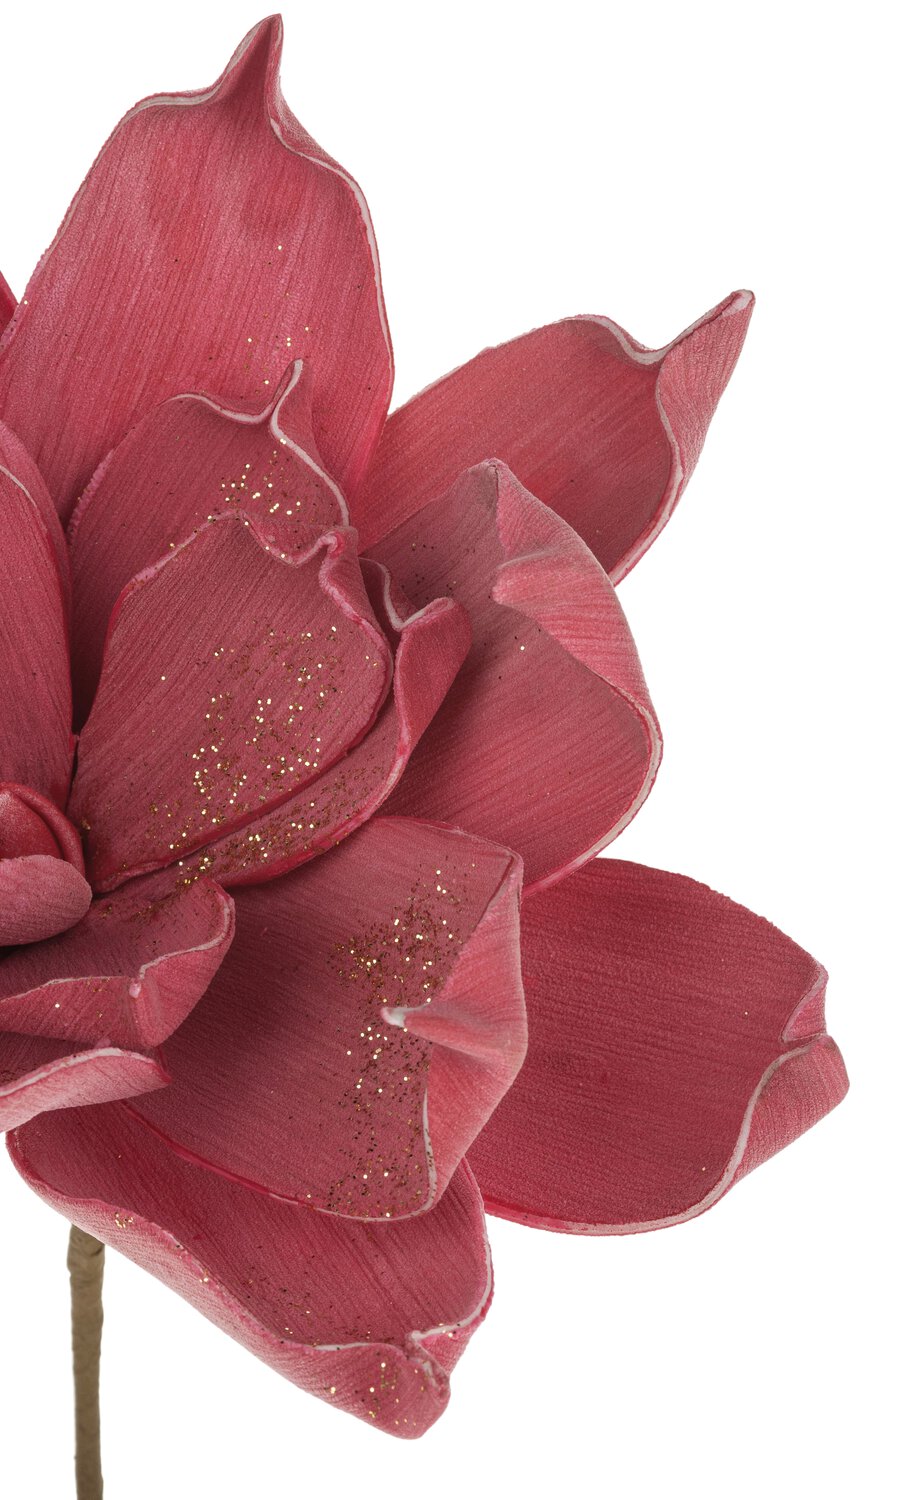 Deko Soft flower 'Aloe' mit Glitzer, 30 cm, rot-gold